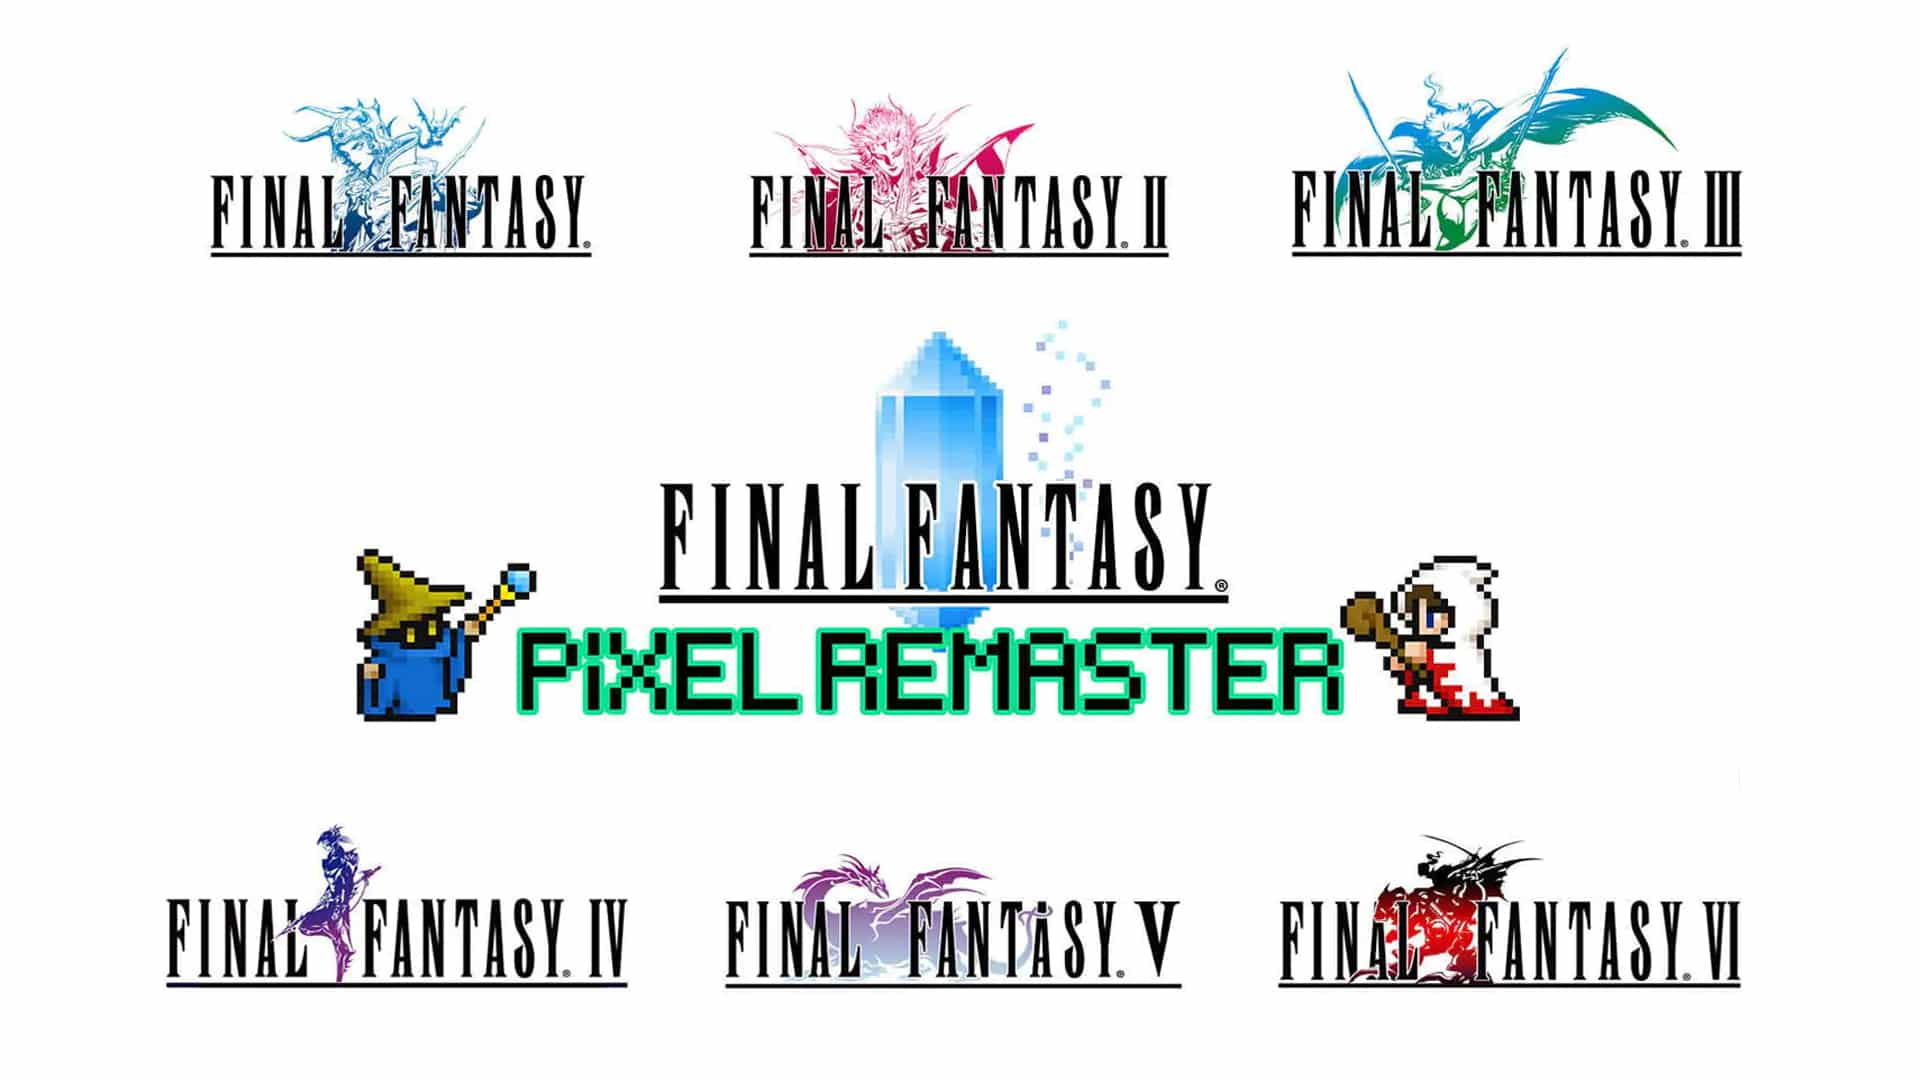 final fantasy pixel remaster